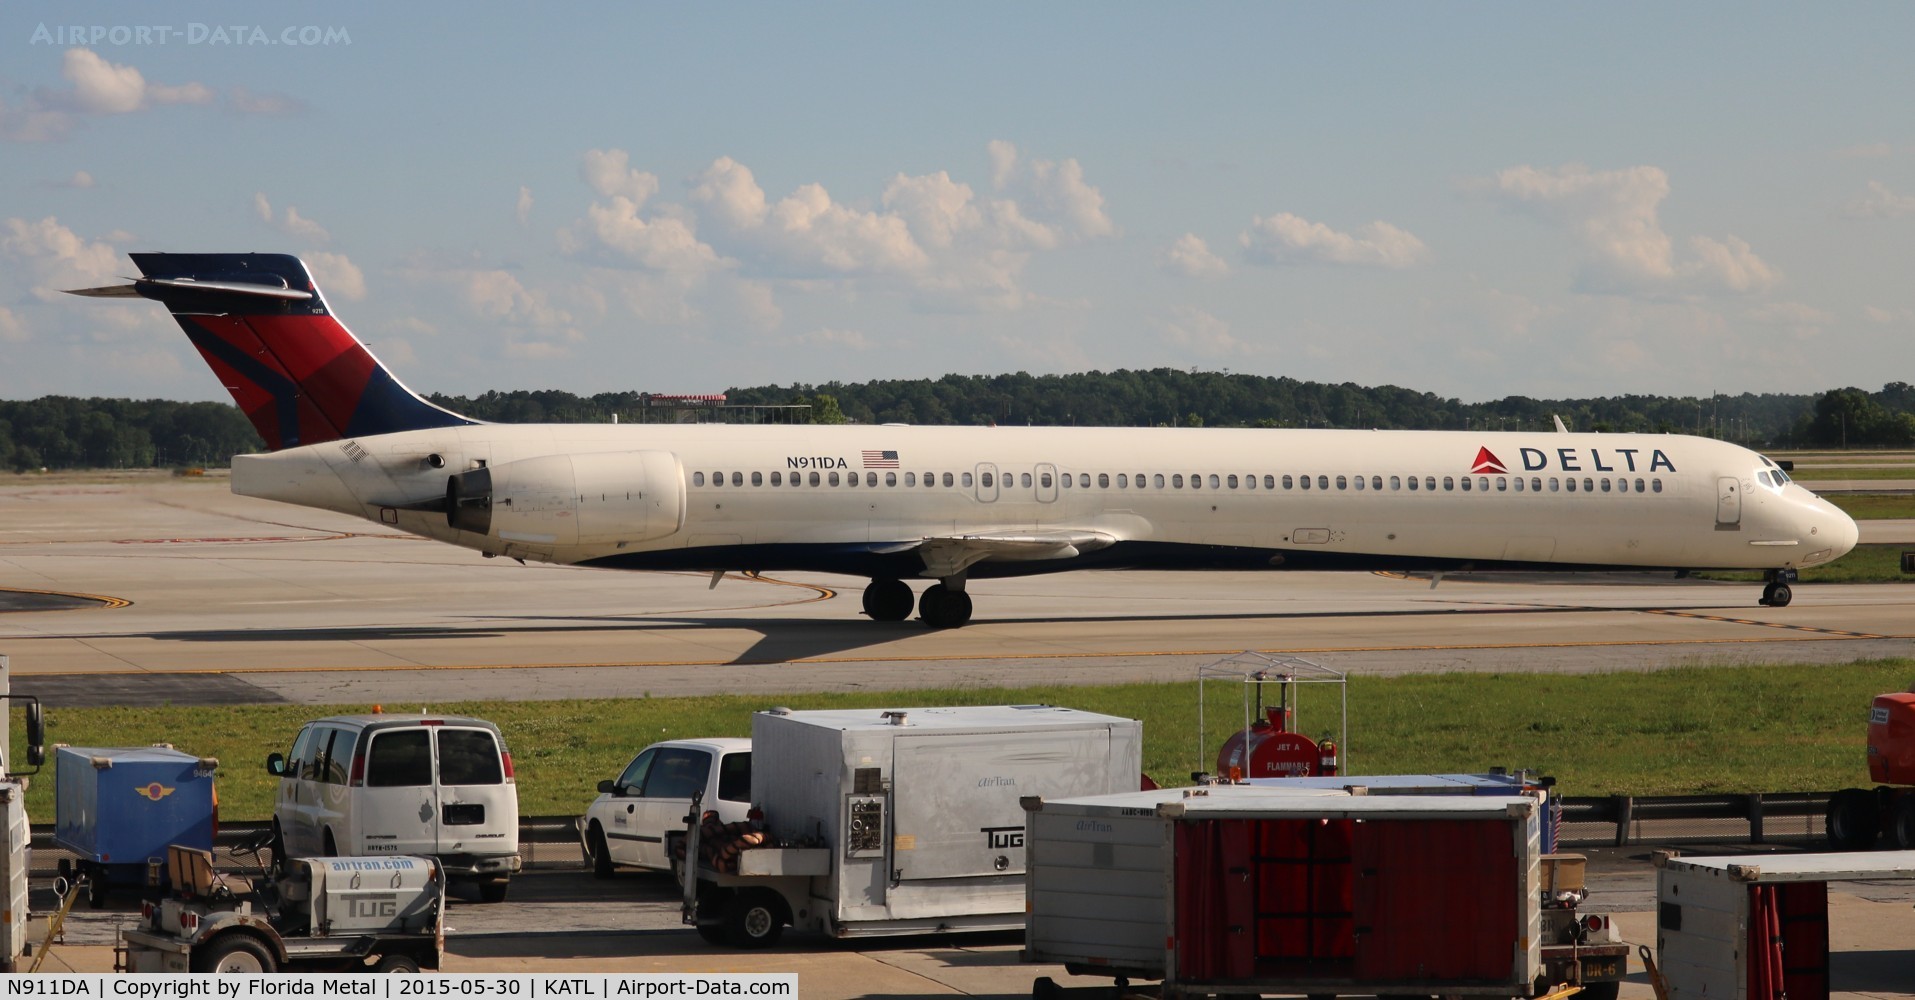 N911DA, 1995 McDonnell Douglas MD-90-30 C/N 53391, ATL spotting